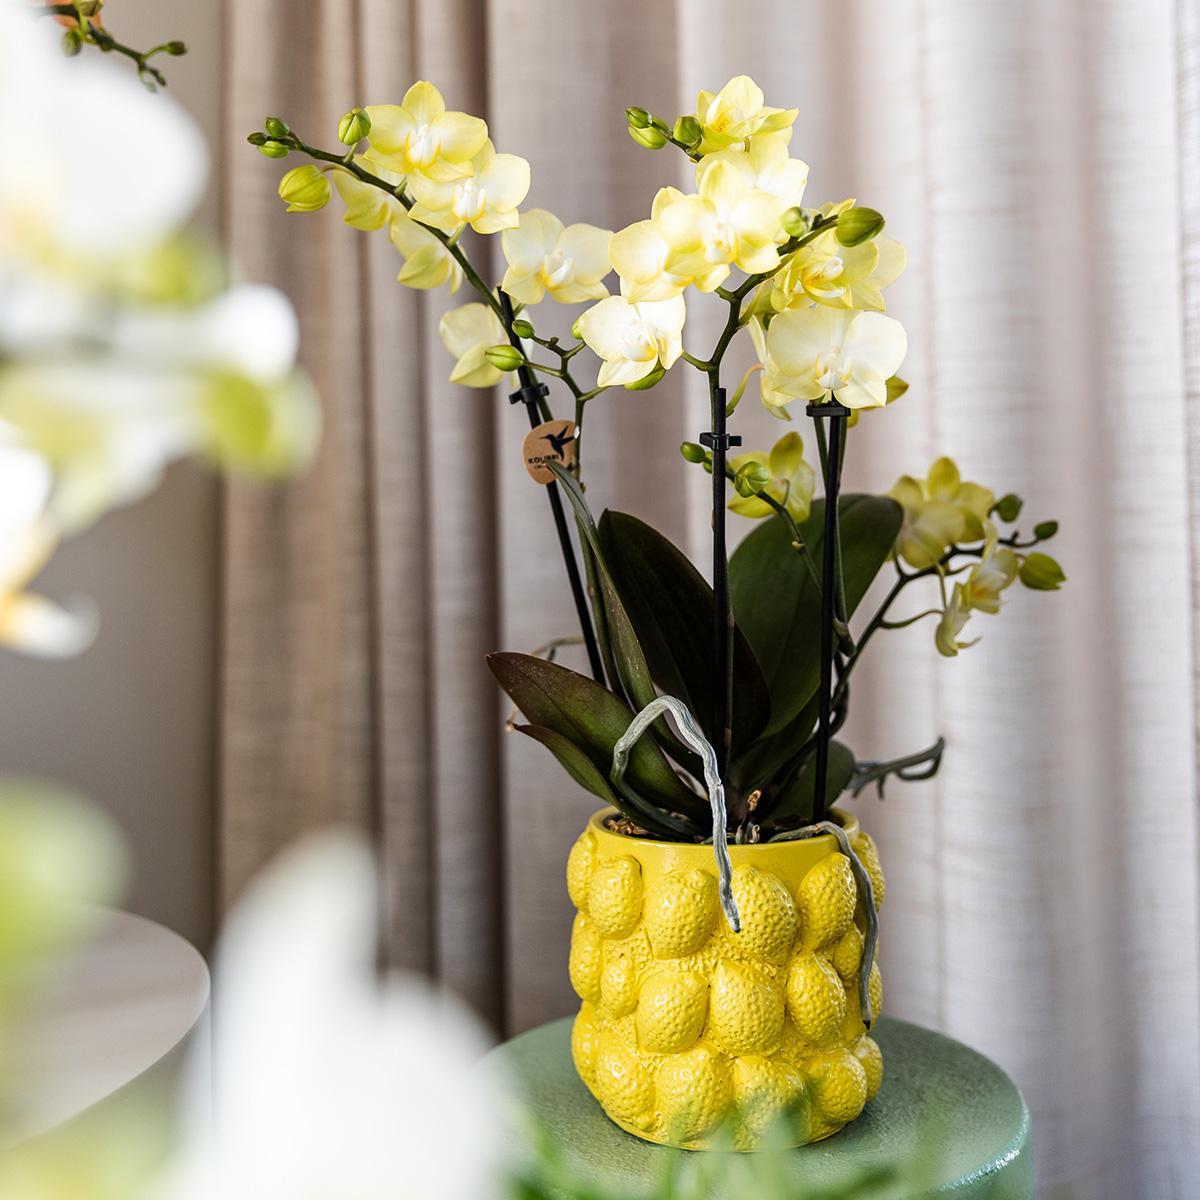 Kolibri Company | Gift set Optimisme Plantenset met oranje Phalaenopsis Orchidee en Succulenten incl. keramieken sierpotten